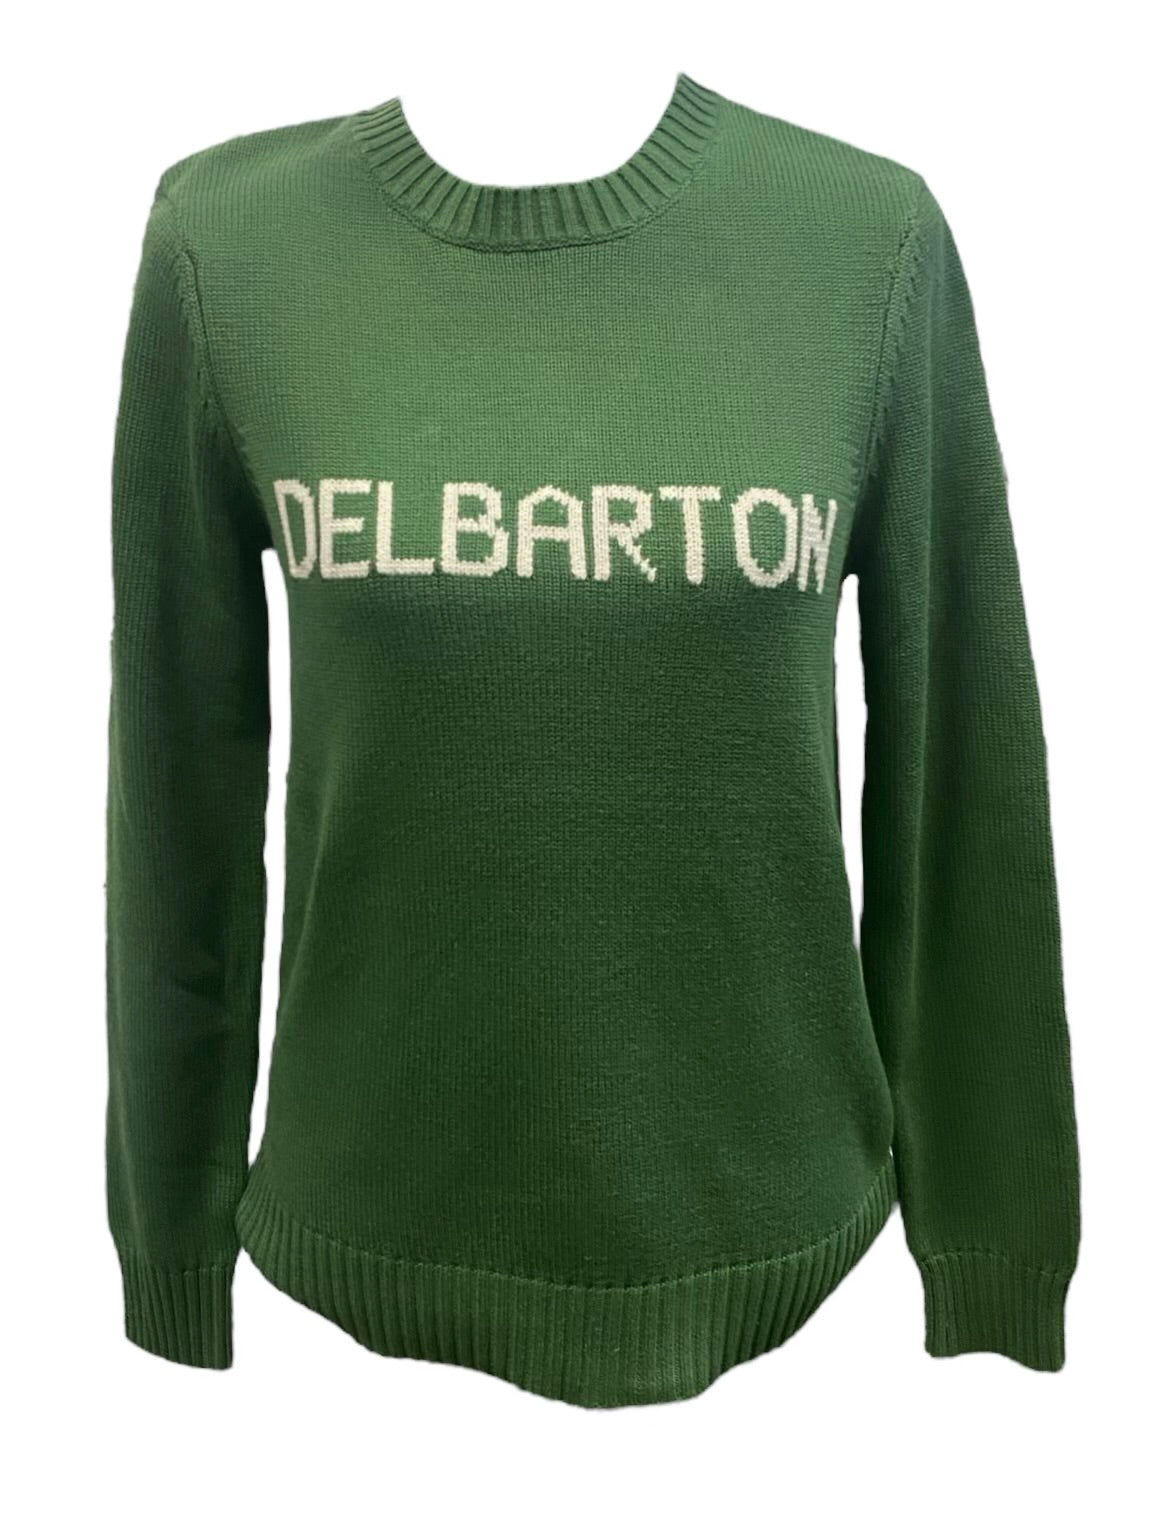 Ellsworth & Ivey Delbarton Sweater - Dark Green